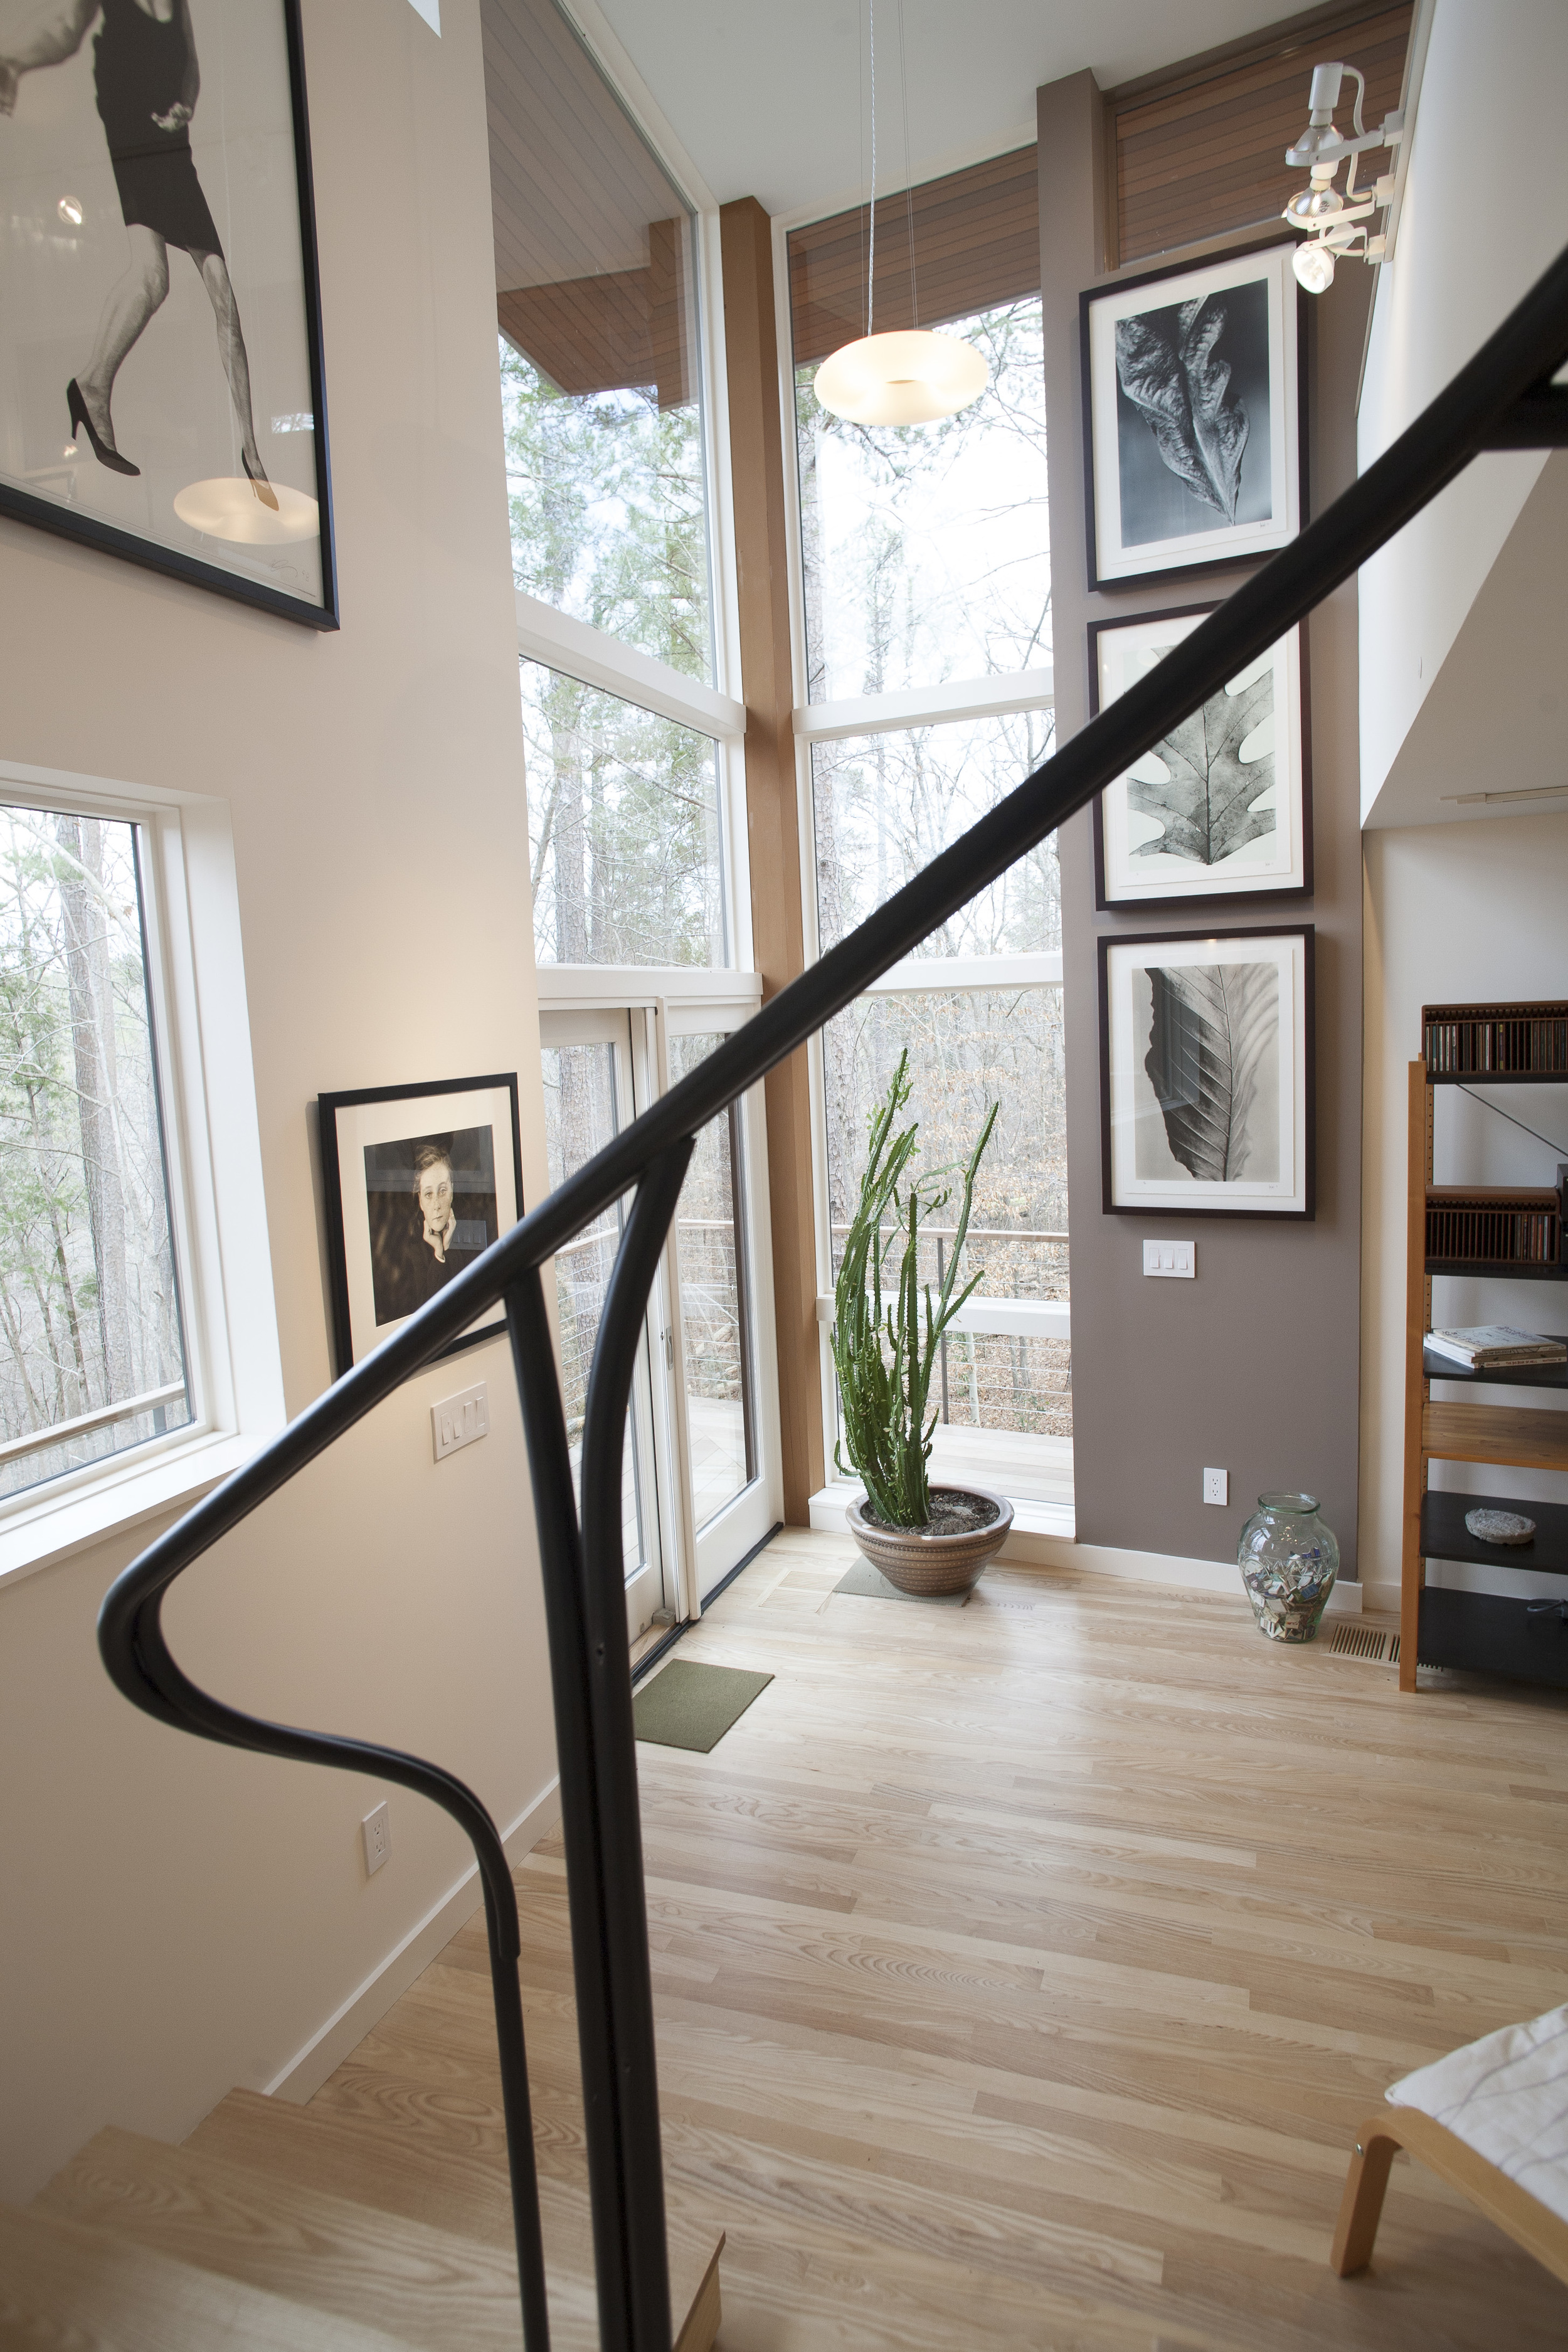 Cassilhaus Interior Artist Pod Studio from Stair Vertical Raw.jpg